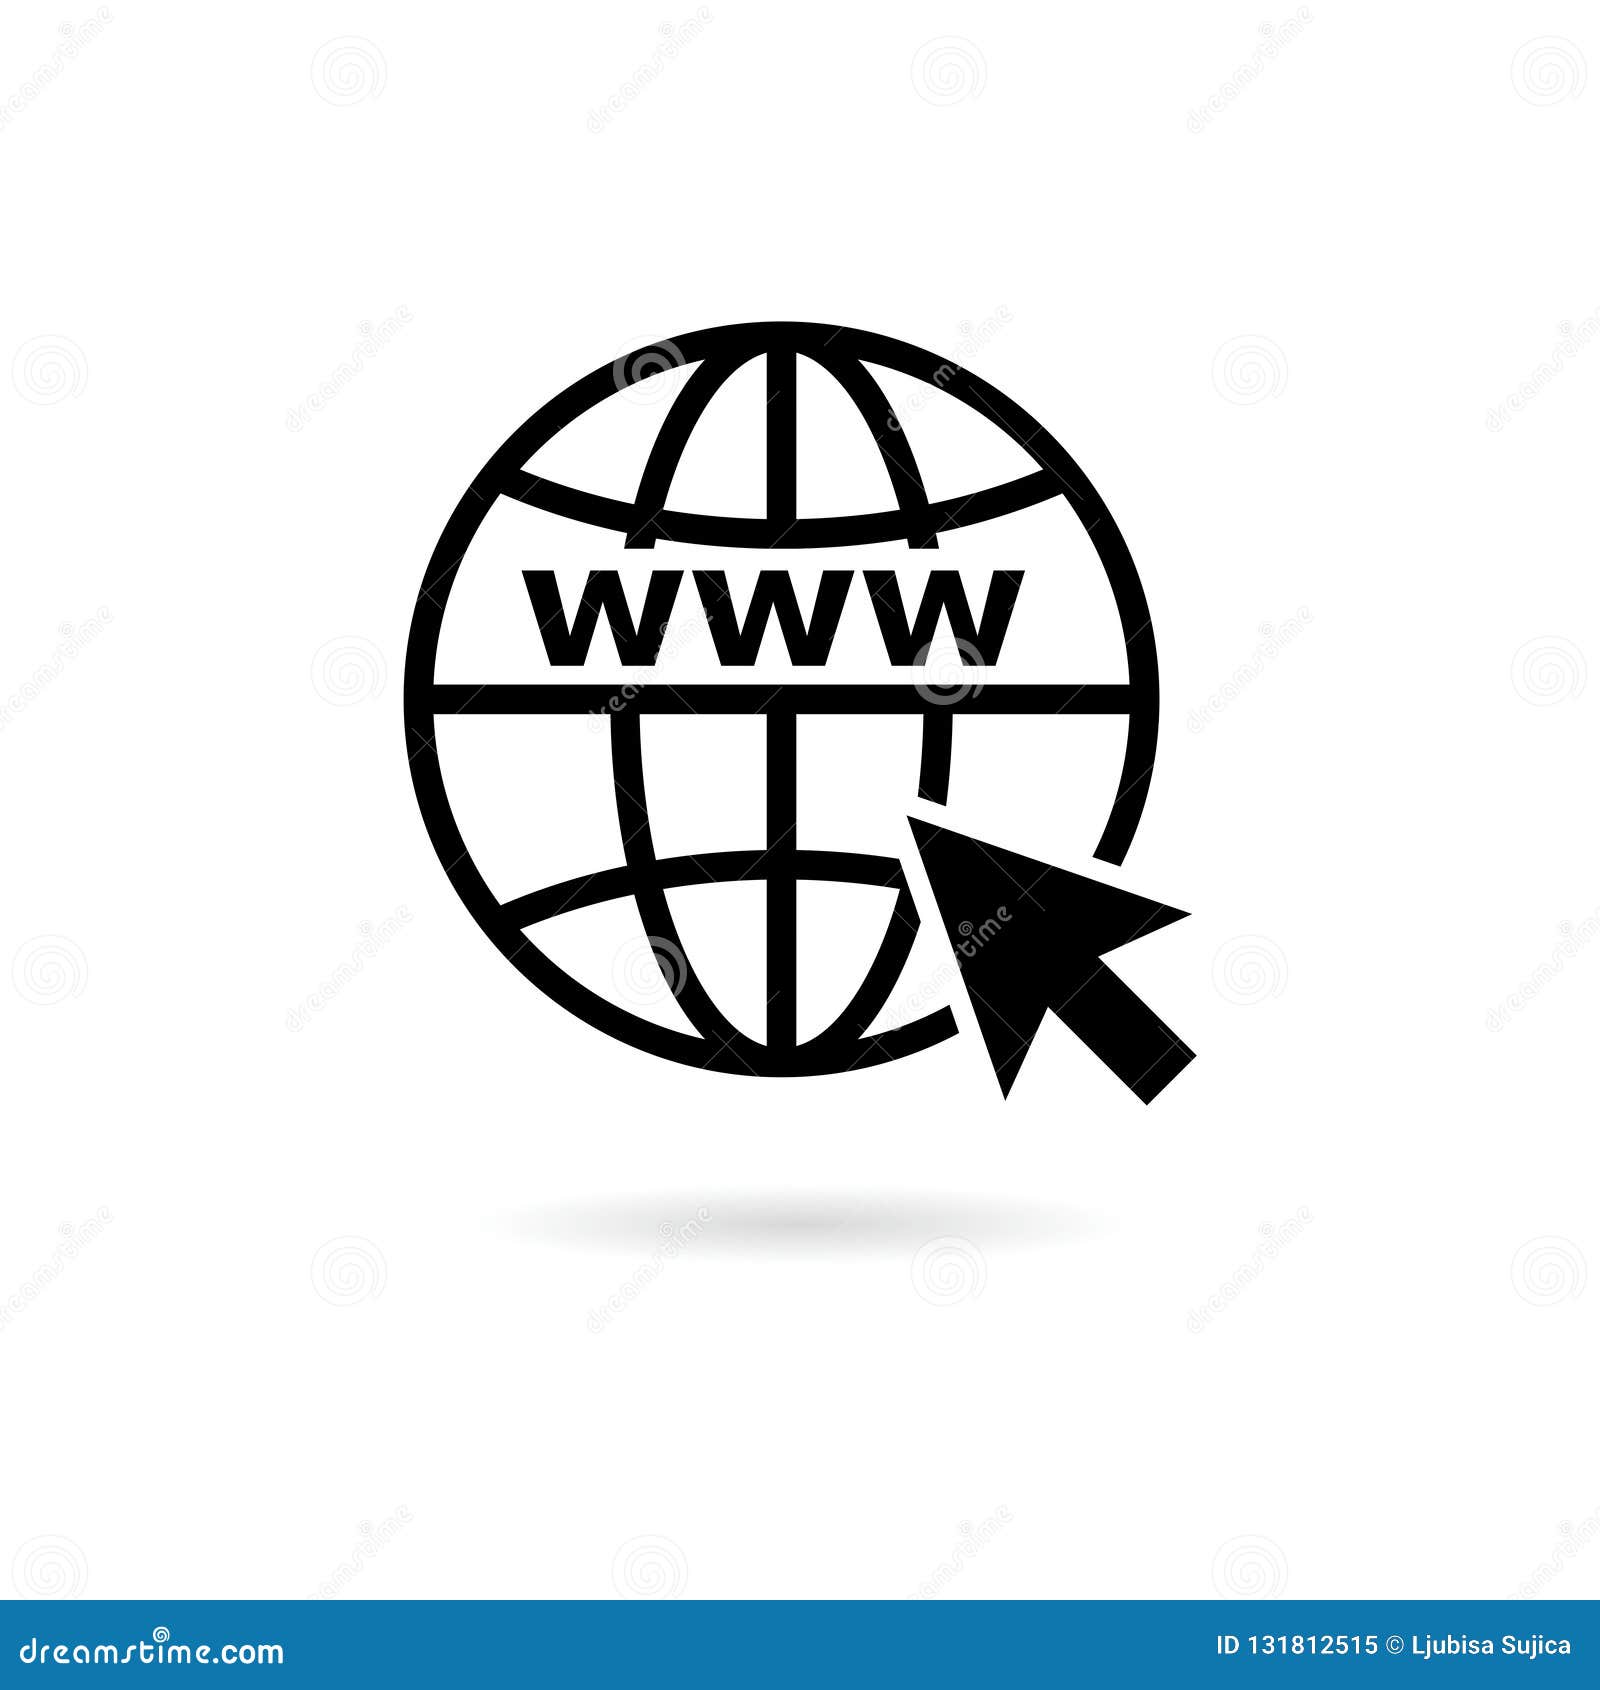 Escarpado objetivo Correo aéreo Black Go To Web Sign, Internet Icon or Logo Stock Vector - Illustration of  symbol, vector: 131812515